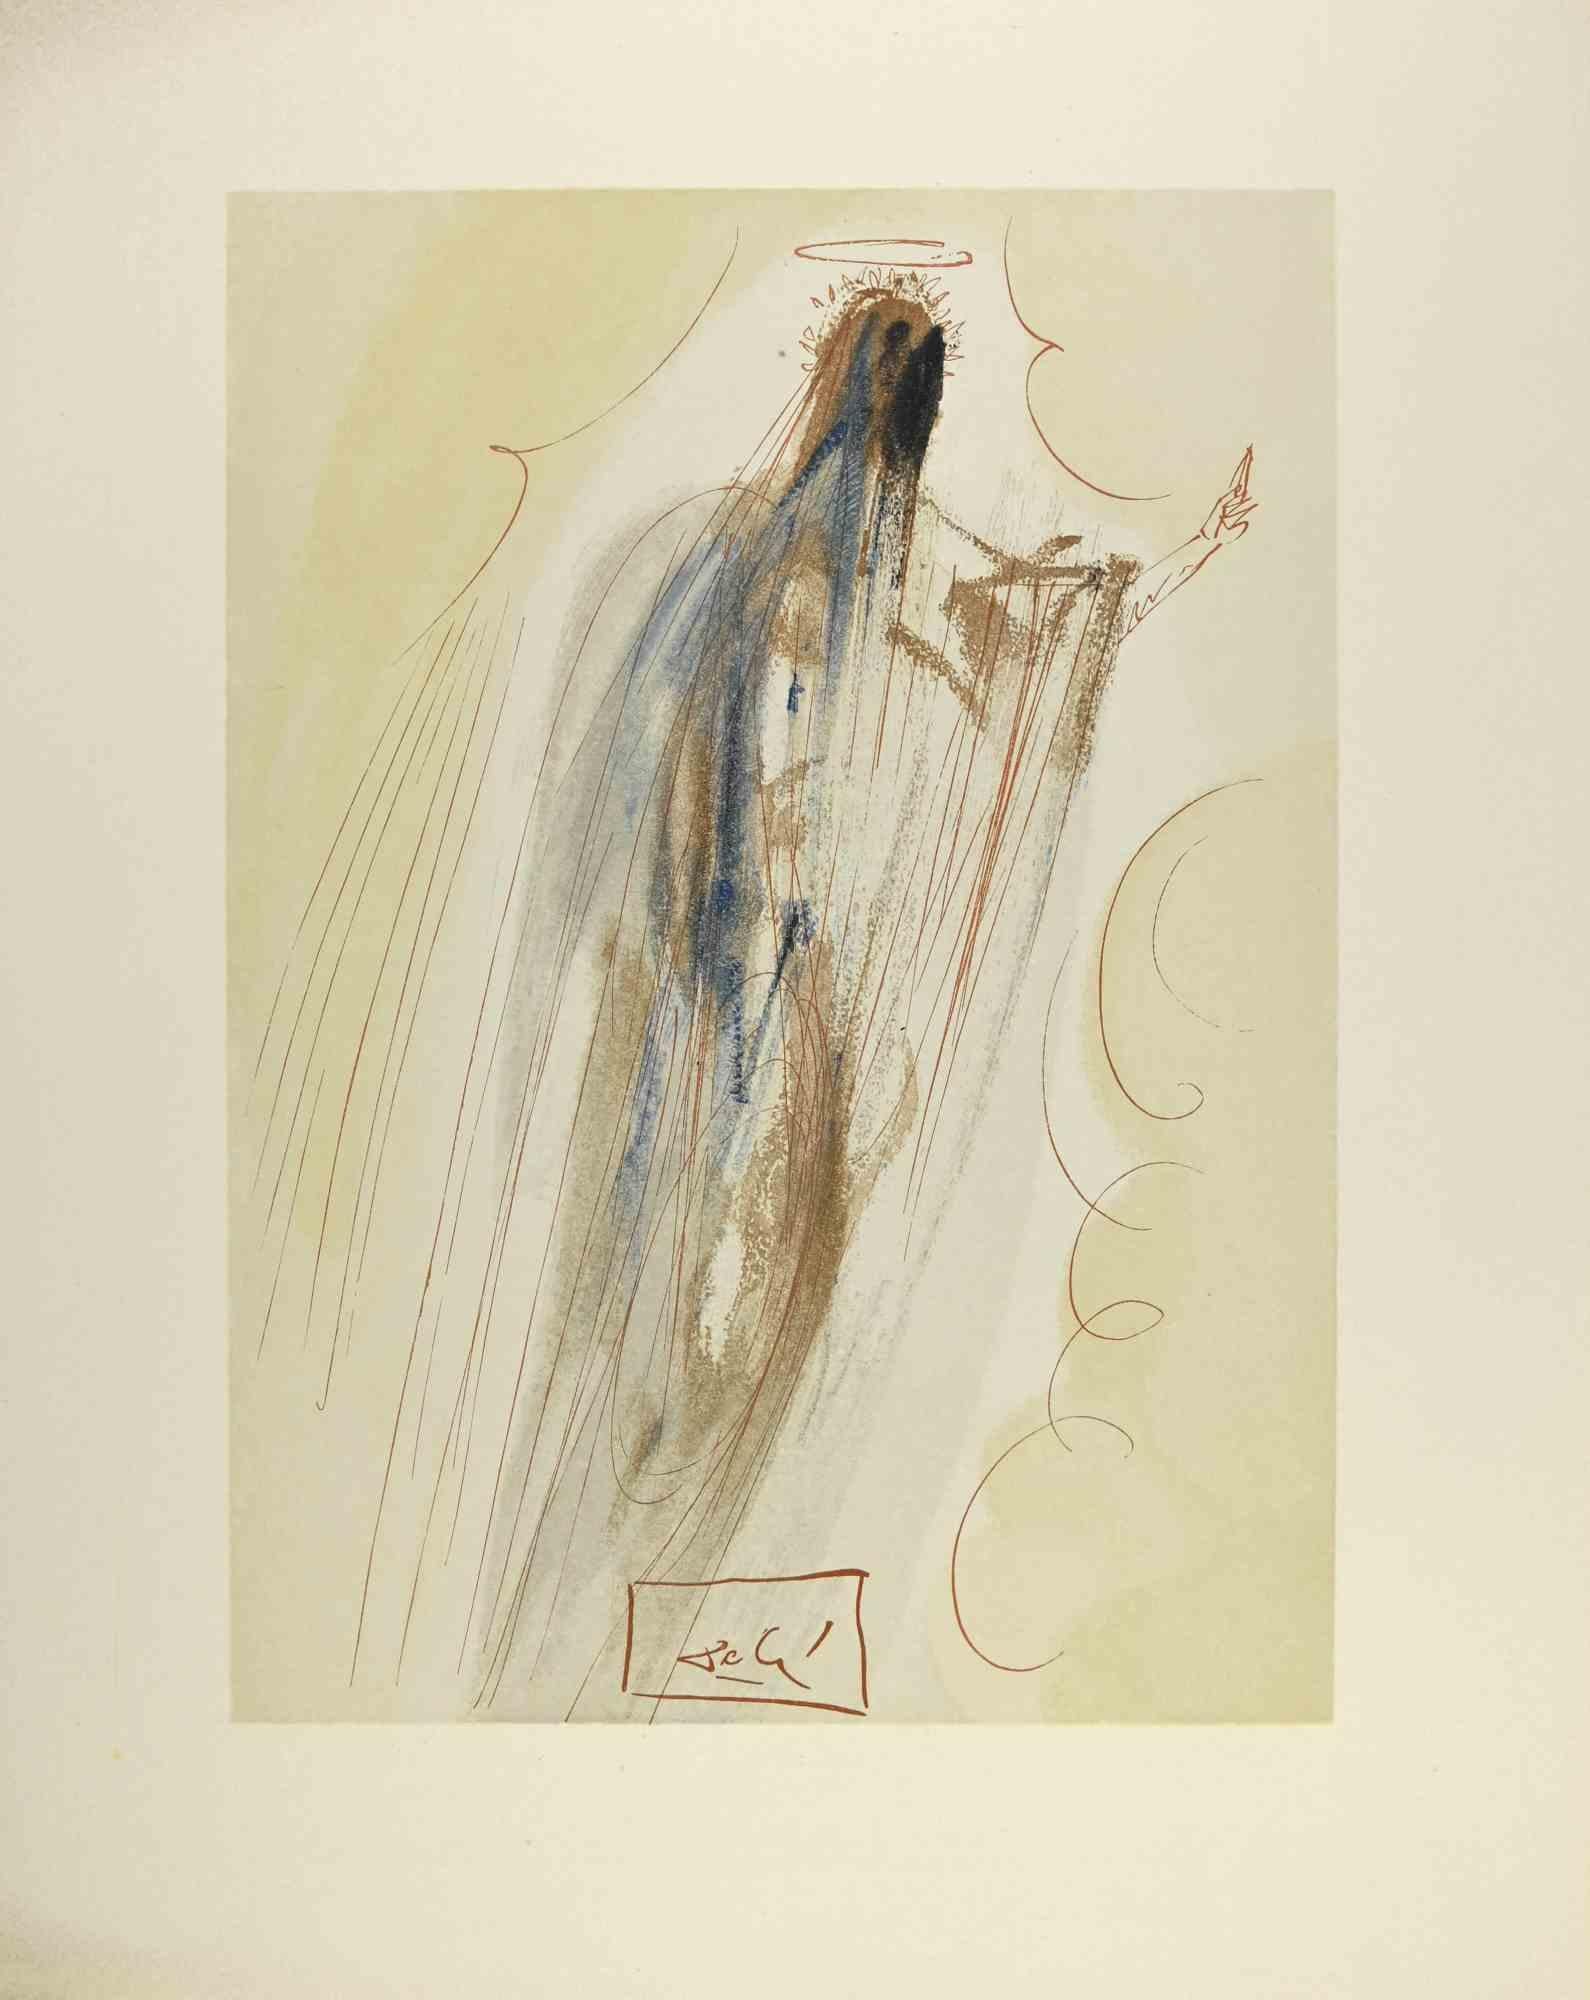 Salvador Dalí Figurative Print - Arrival in the Empyrean - Woodcut - 1963